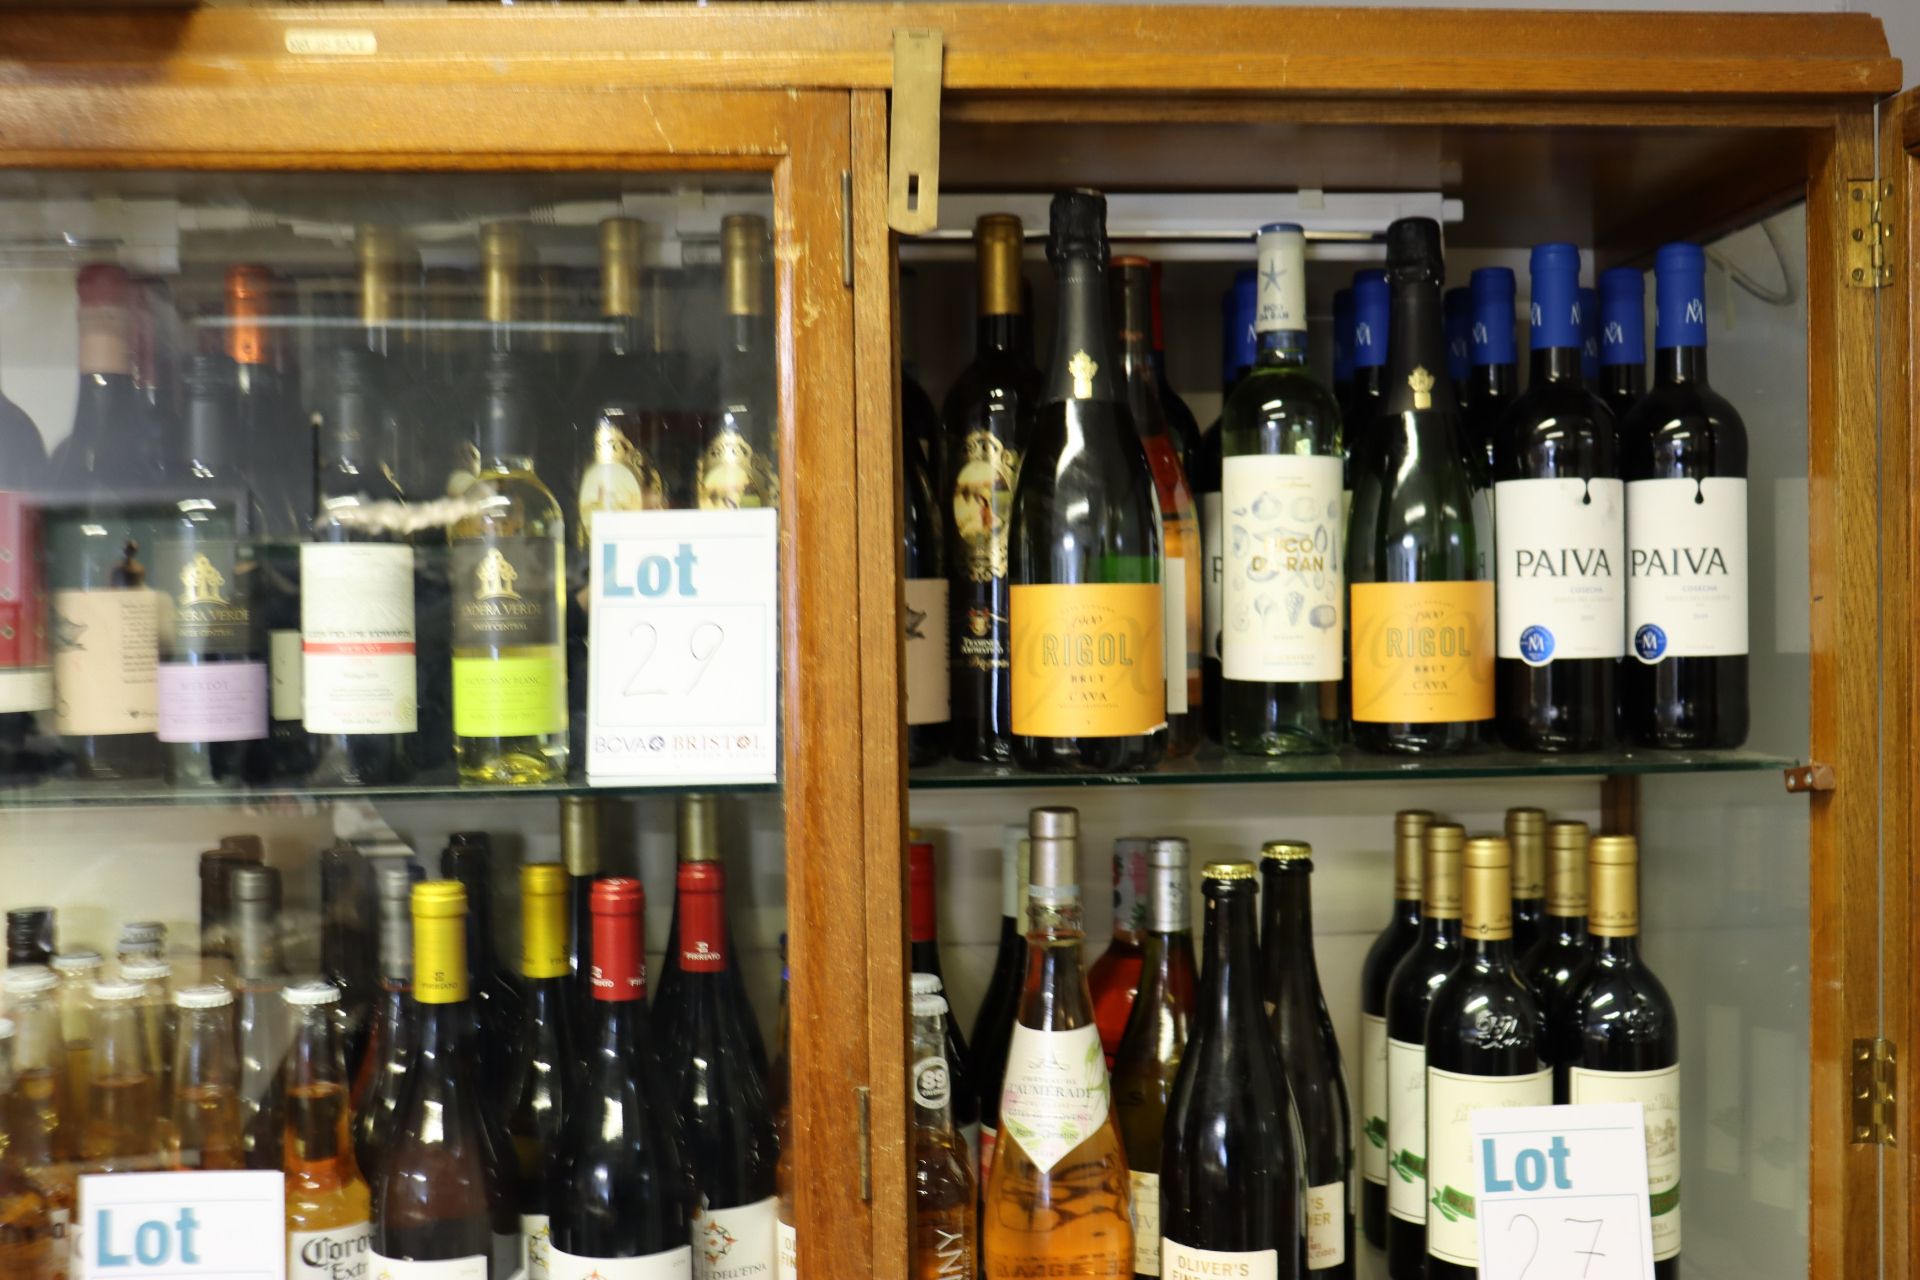 A large quantity of assorted wine and related items to include 1900 Rigol cava, Altos Ibericos Rioja